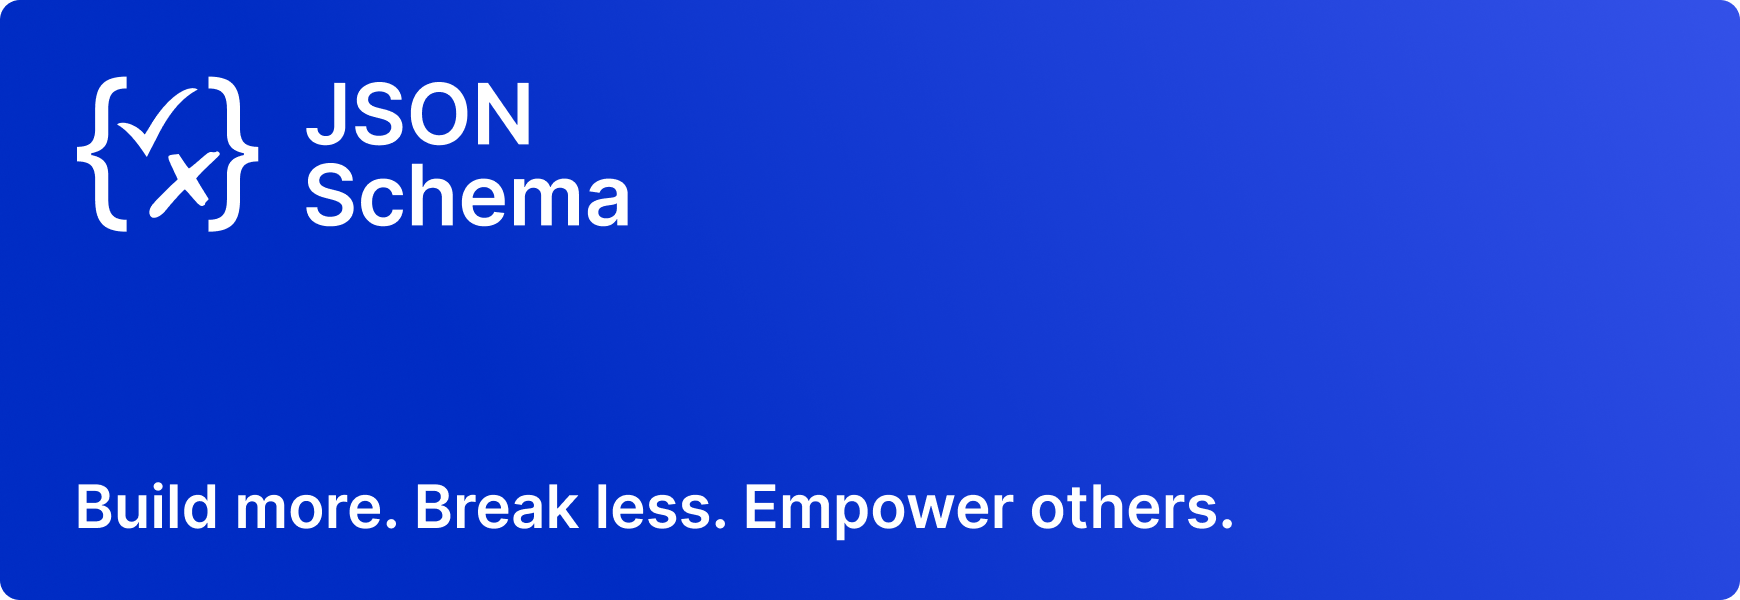 JSON Schema logo - Build more, break less, empower others.